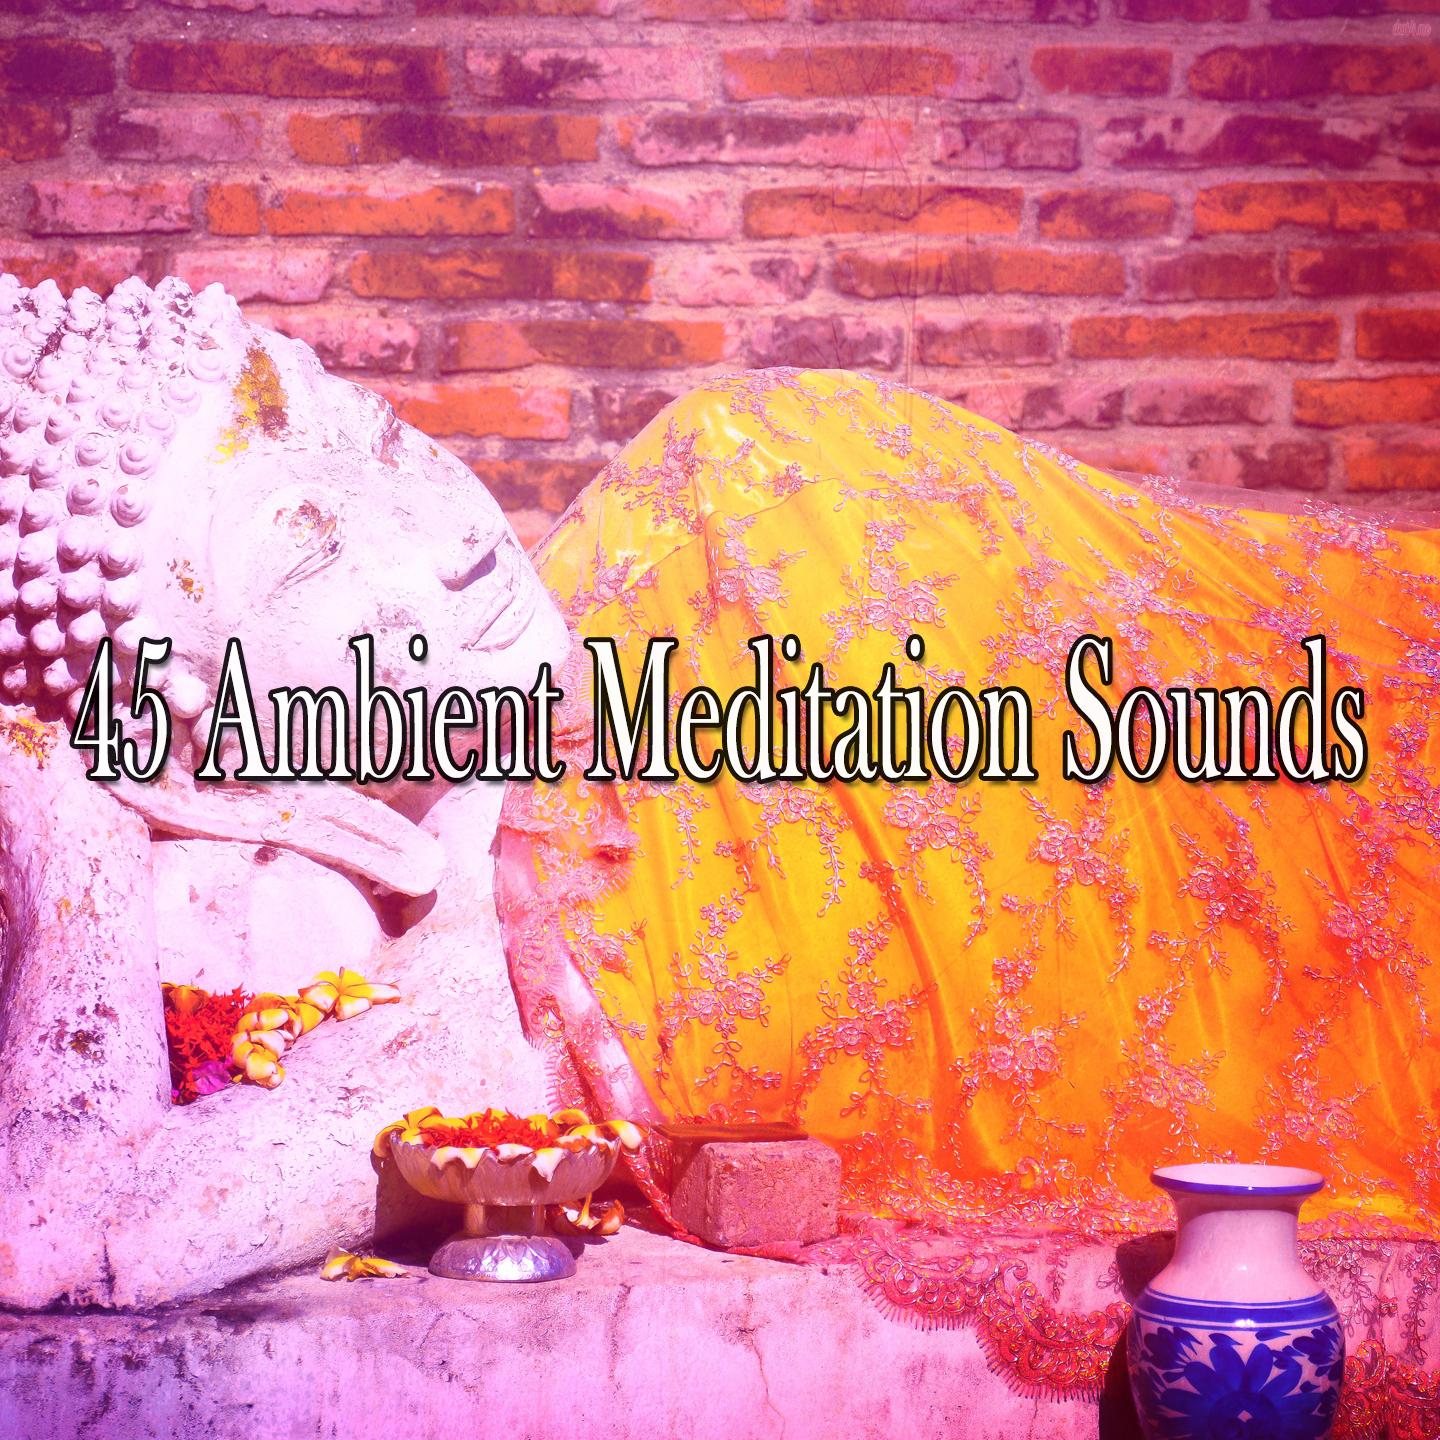 45 Ambient Meditation Sounds